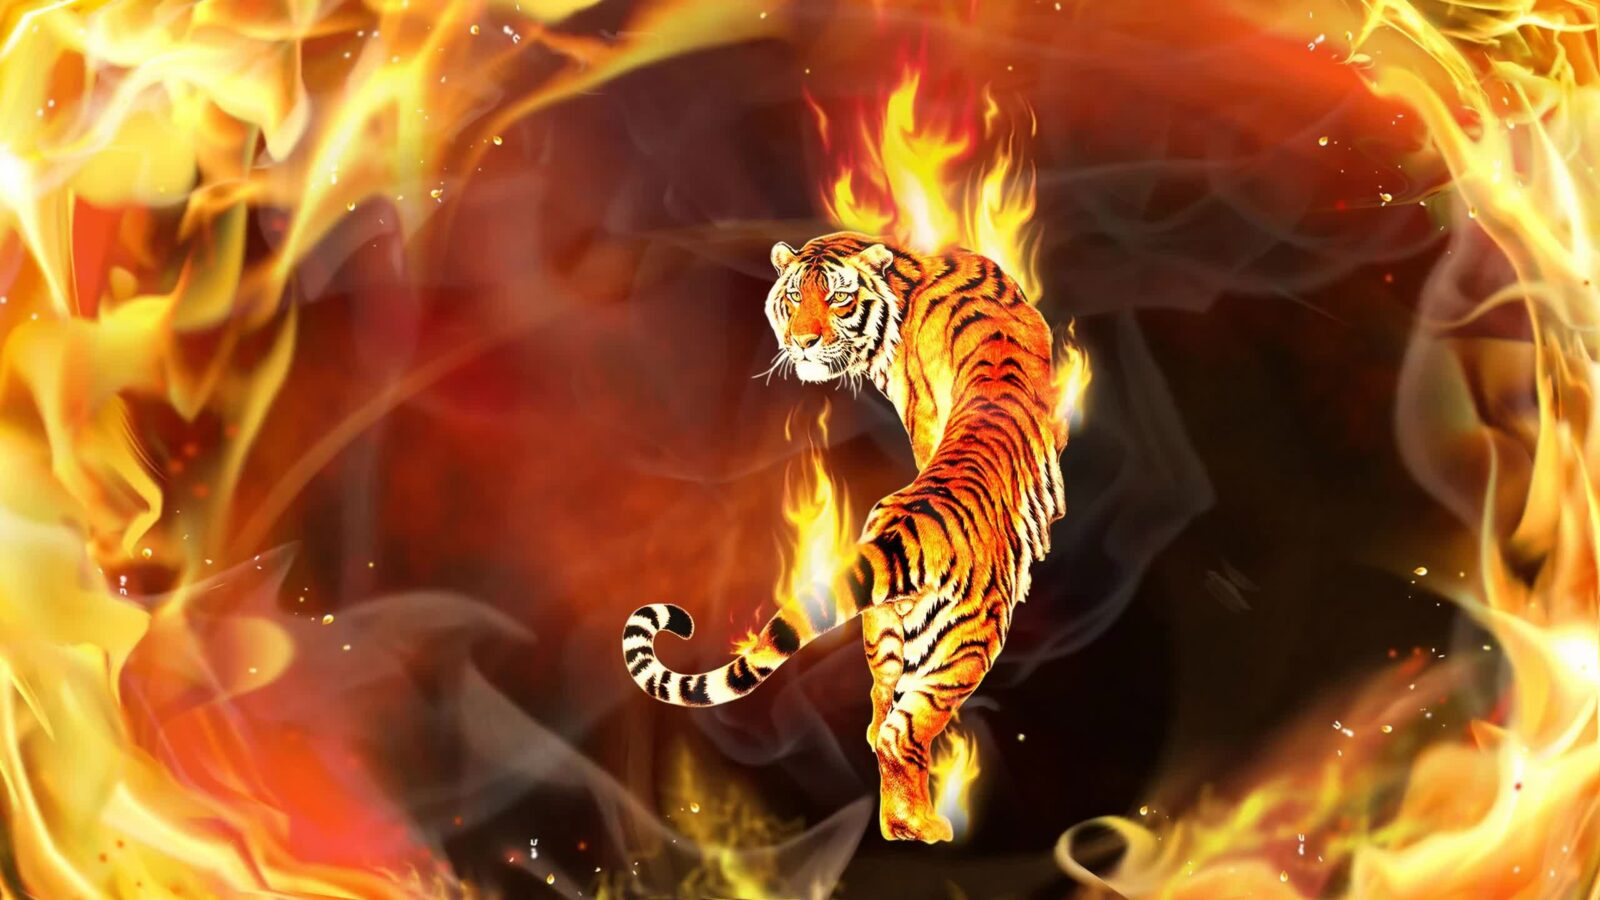 LiveWallpapers4Free.com | Tiger In Flames Digital Art 2K Quality - Free Live Wallpaper